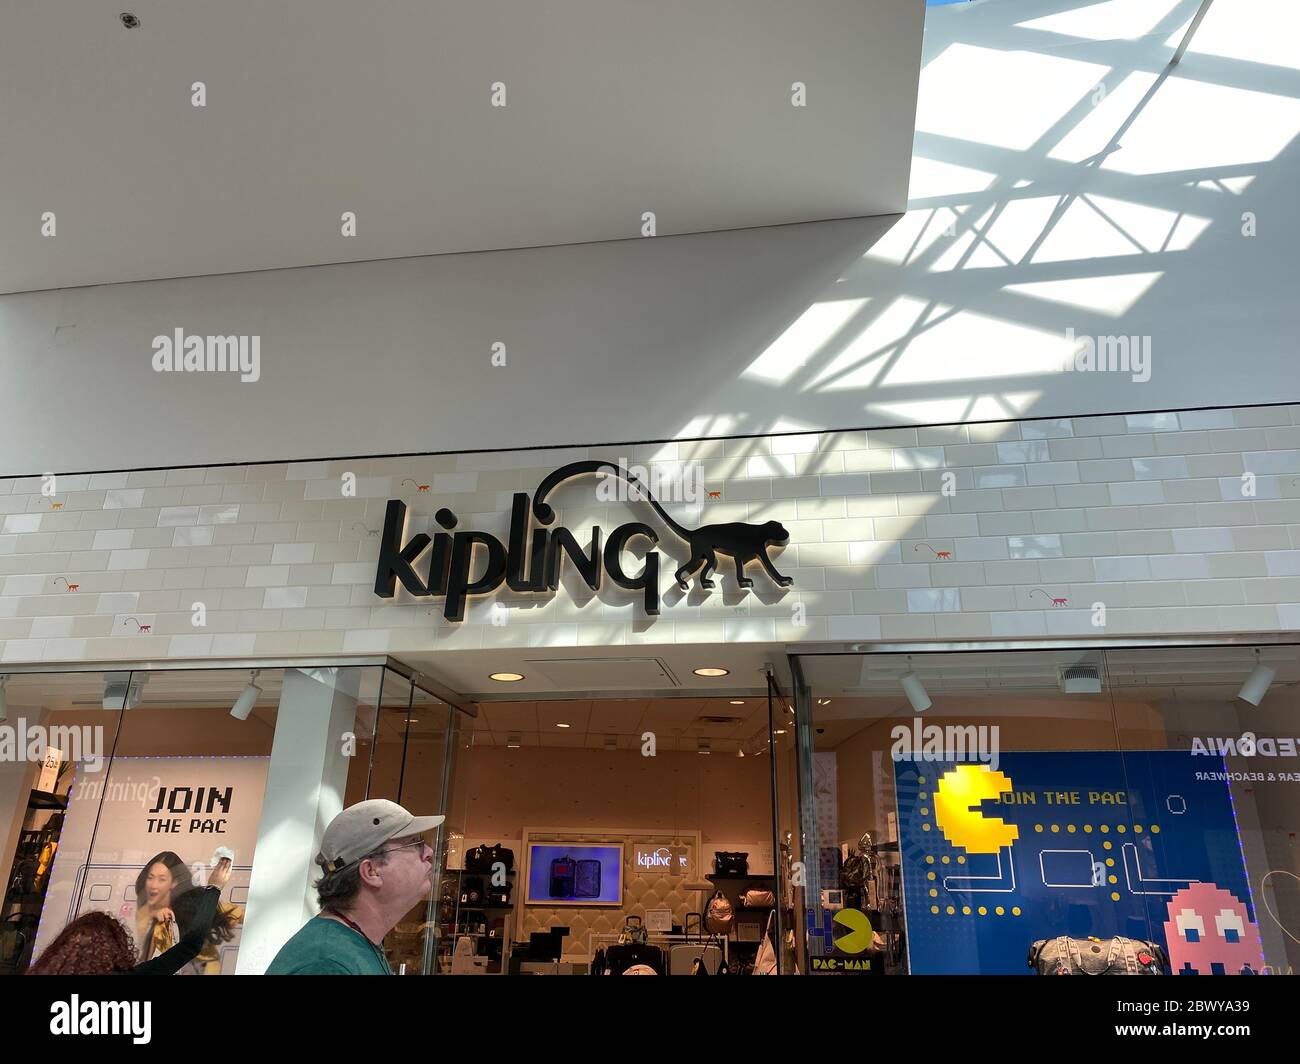 Orlando,FL/USA-2/17/20: The Kipling storefront at the MIllenia Mall in  Orlando, Florida Stock Photo - Alamy